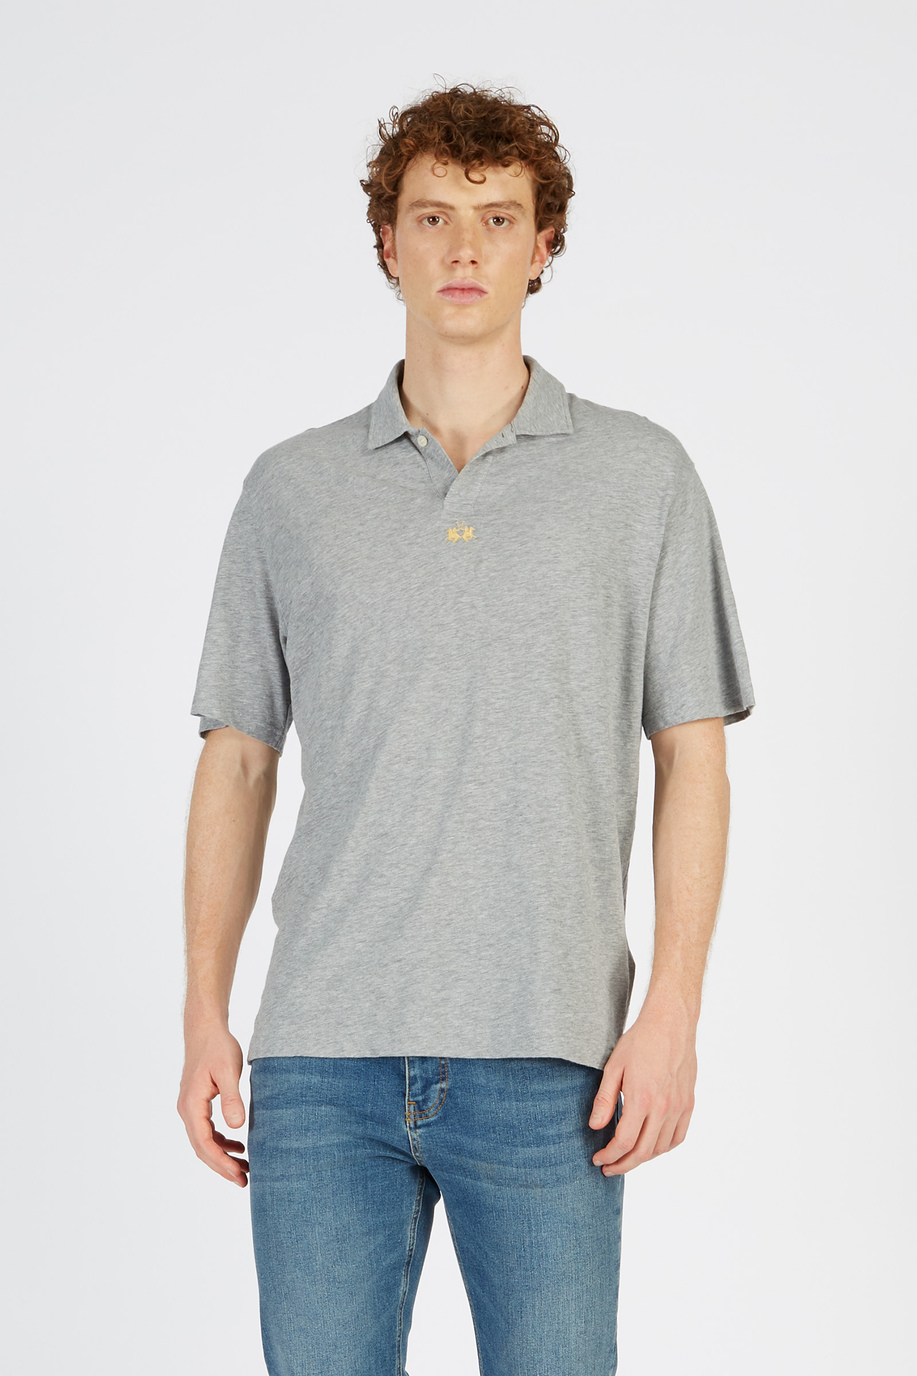 Men's polo shirt in a regular fit - Polo 19-42 - carryover | La Martina - Official Online Shop